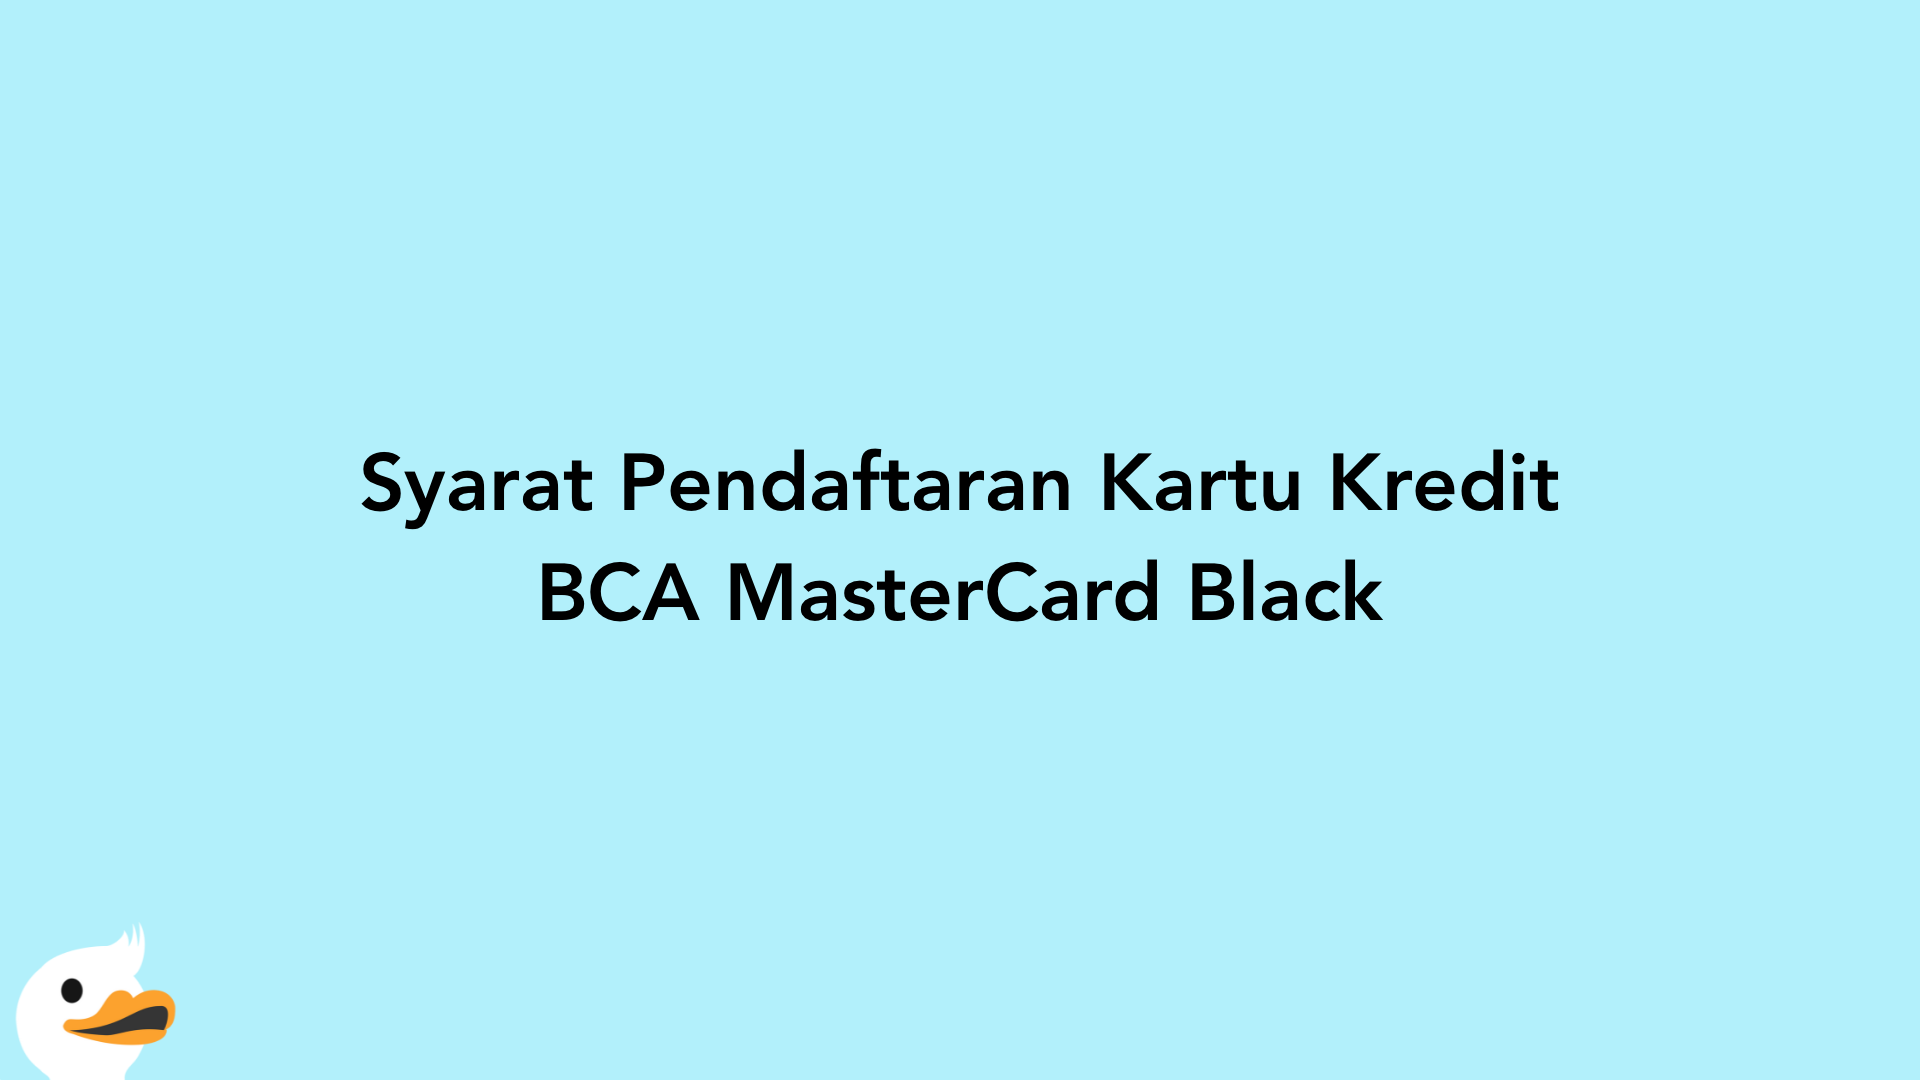 Syarat Pendaftaran Kartu Kredit BCA MasterCard Black